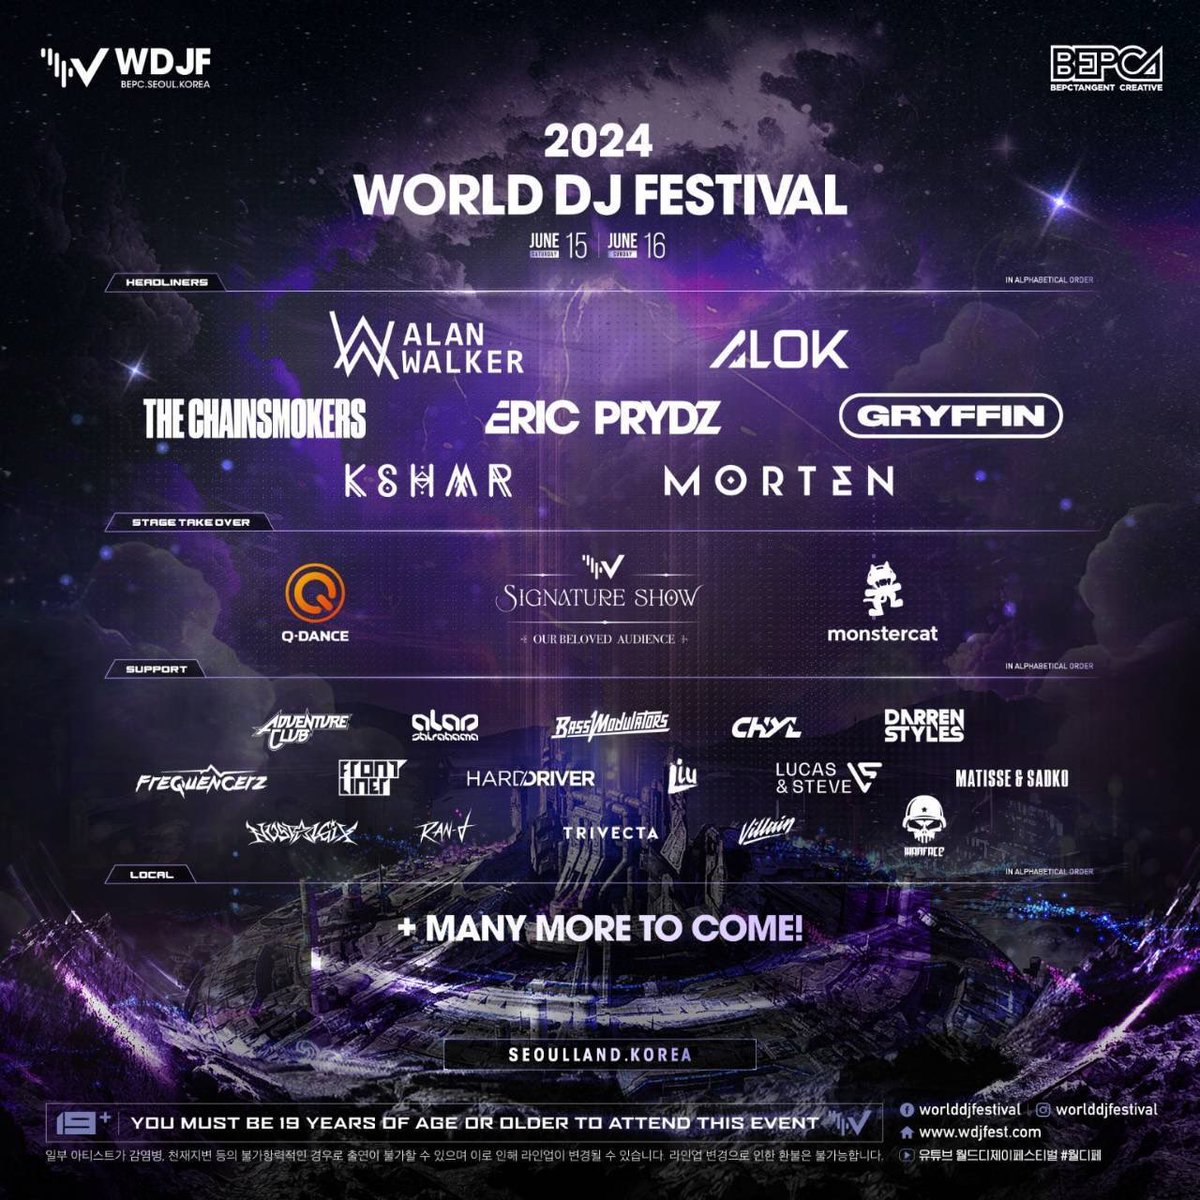 【#ALANSHIRAHAMA NEWS】
6/15(土)WORLD DJ FESTIVAL 2024@SEOUL LAND KOREAに出演決定🔥🔥🔥
海外フェス初出演✨
お楽しみに........🔈🔈🔈